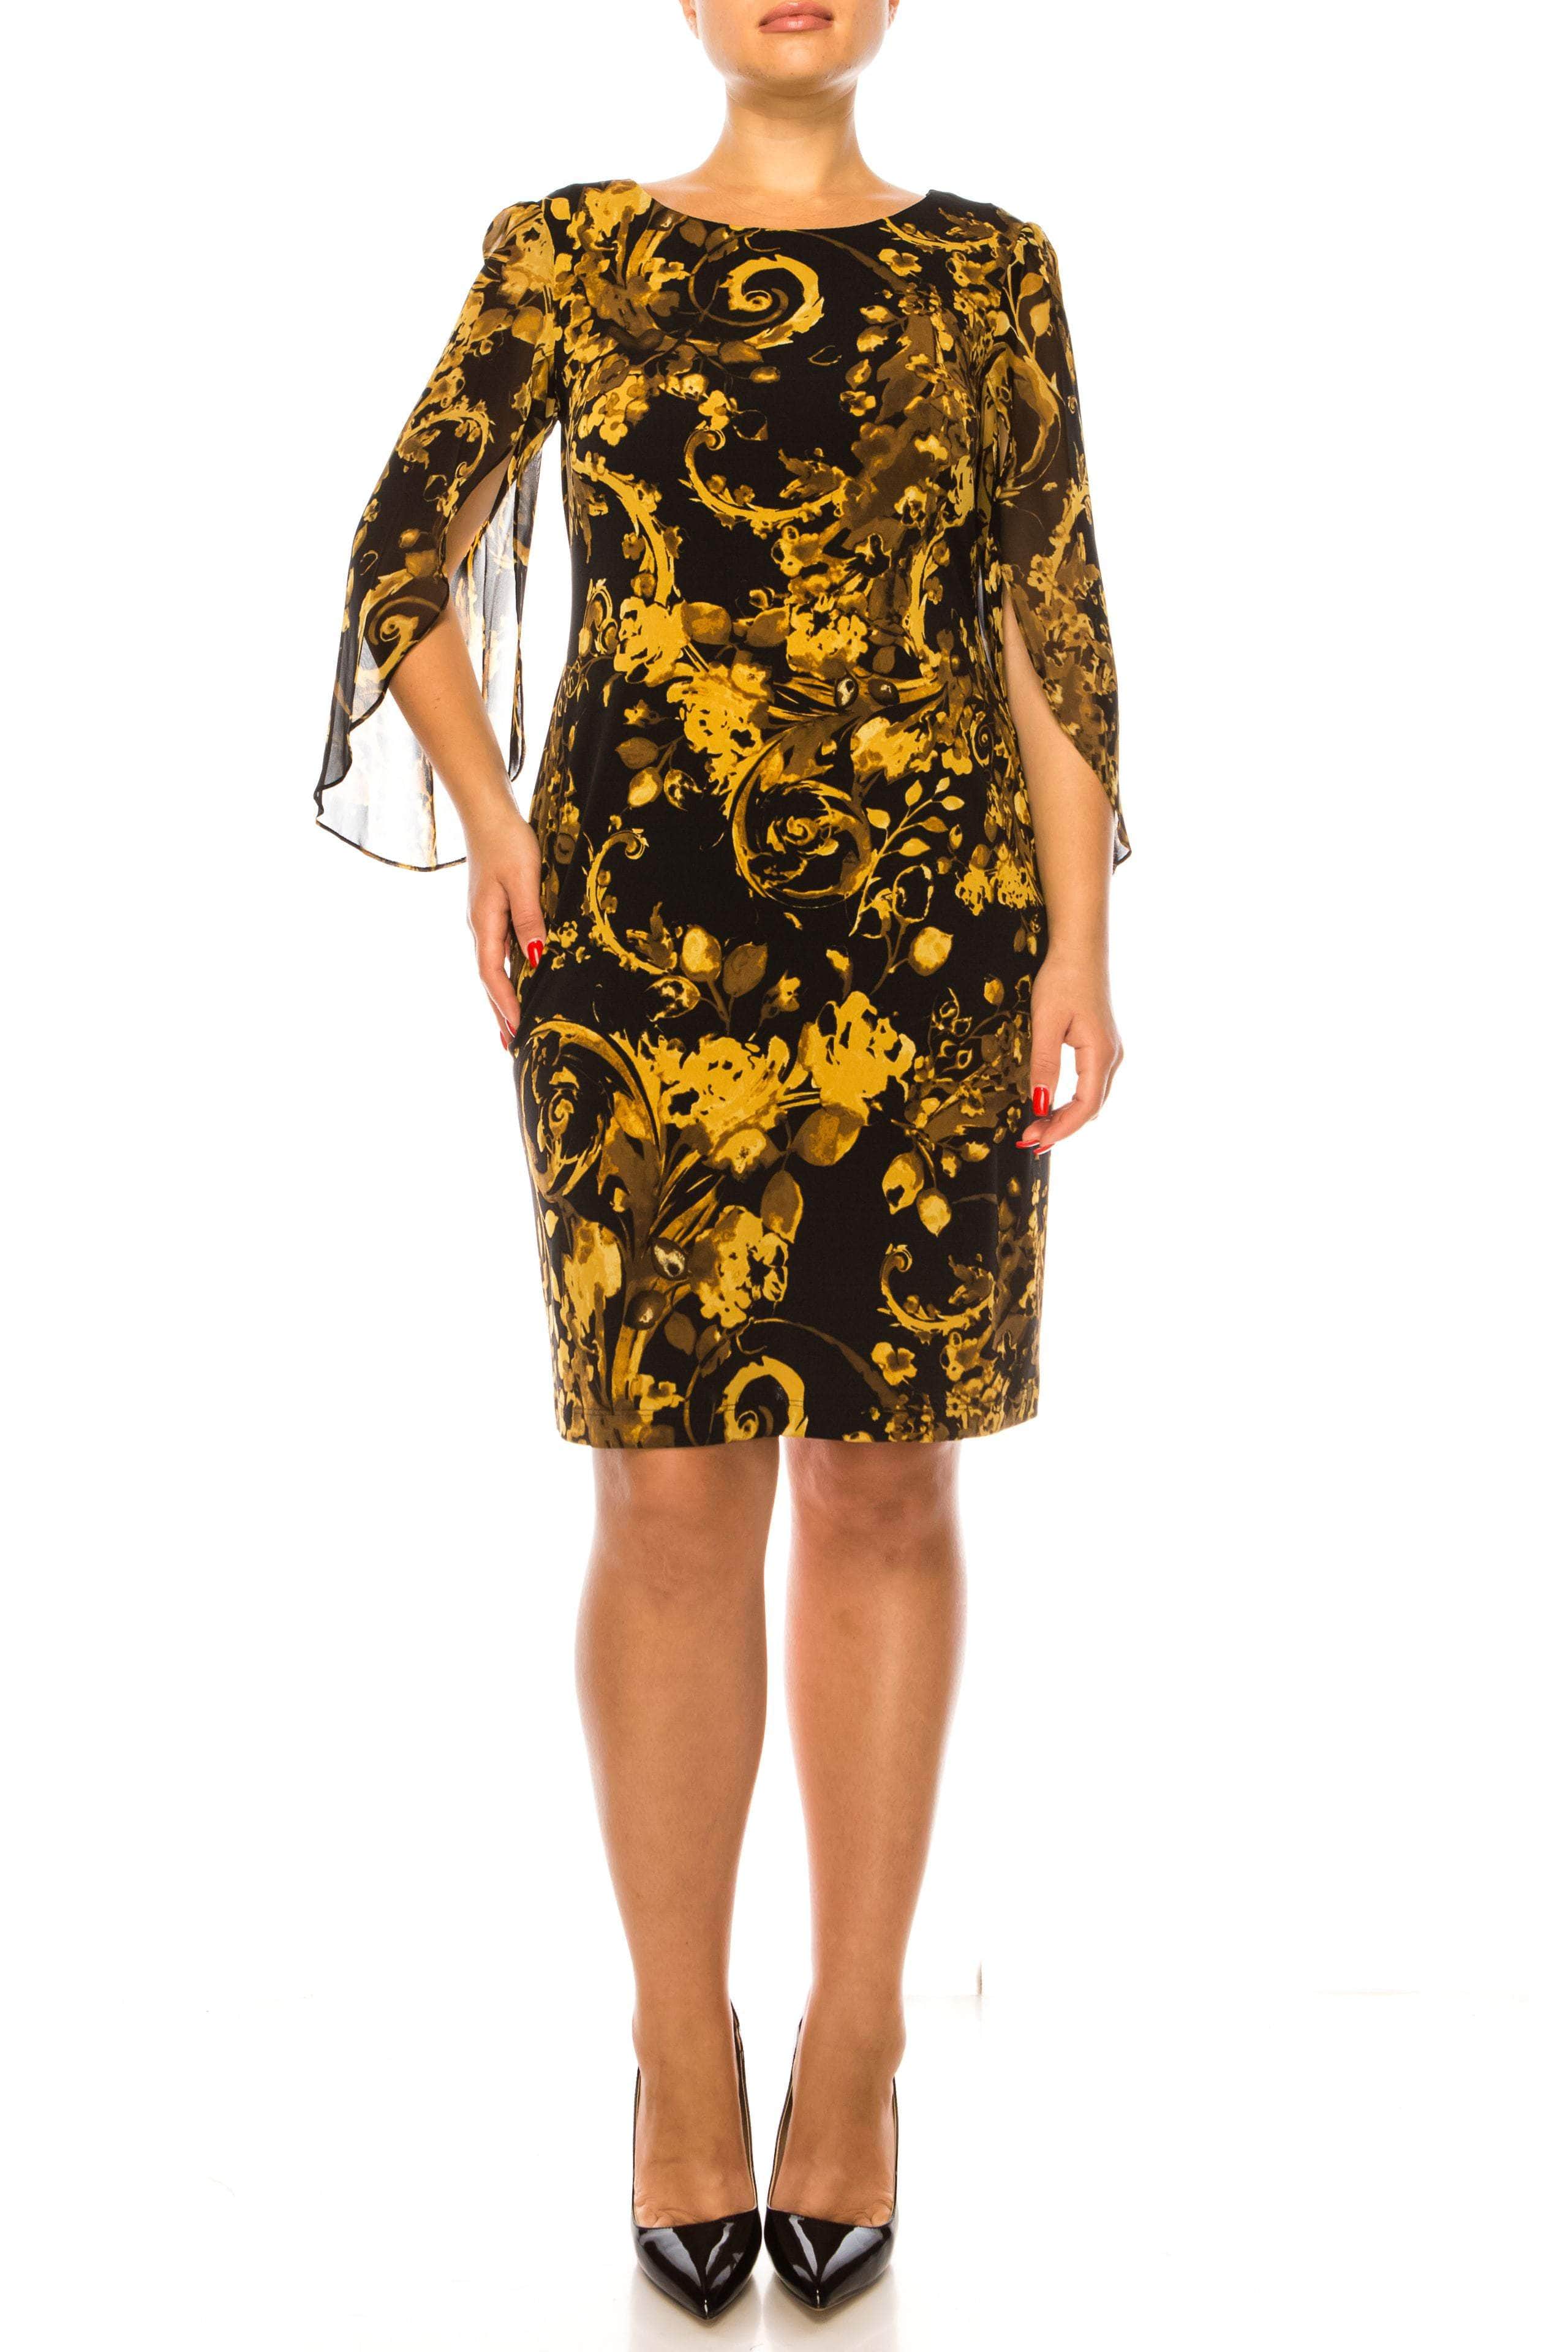 Image of Connected Apparel TCC97727 - Sheer Sleeve Floral Printed Formal Dress